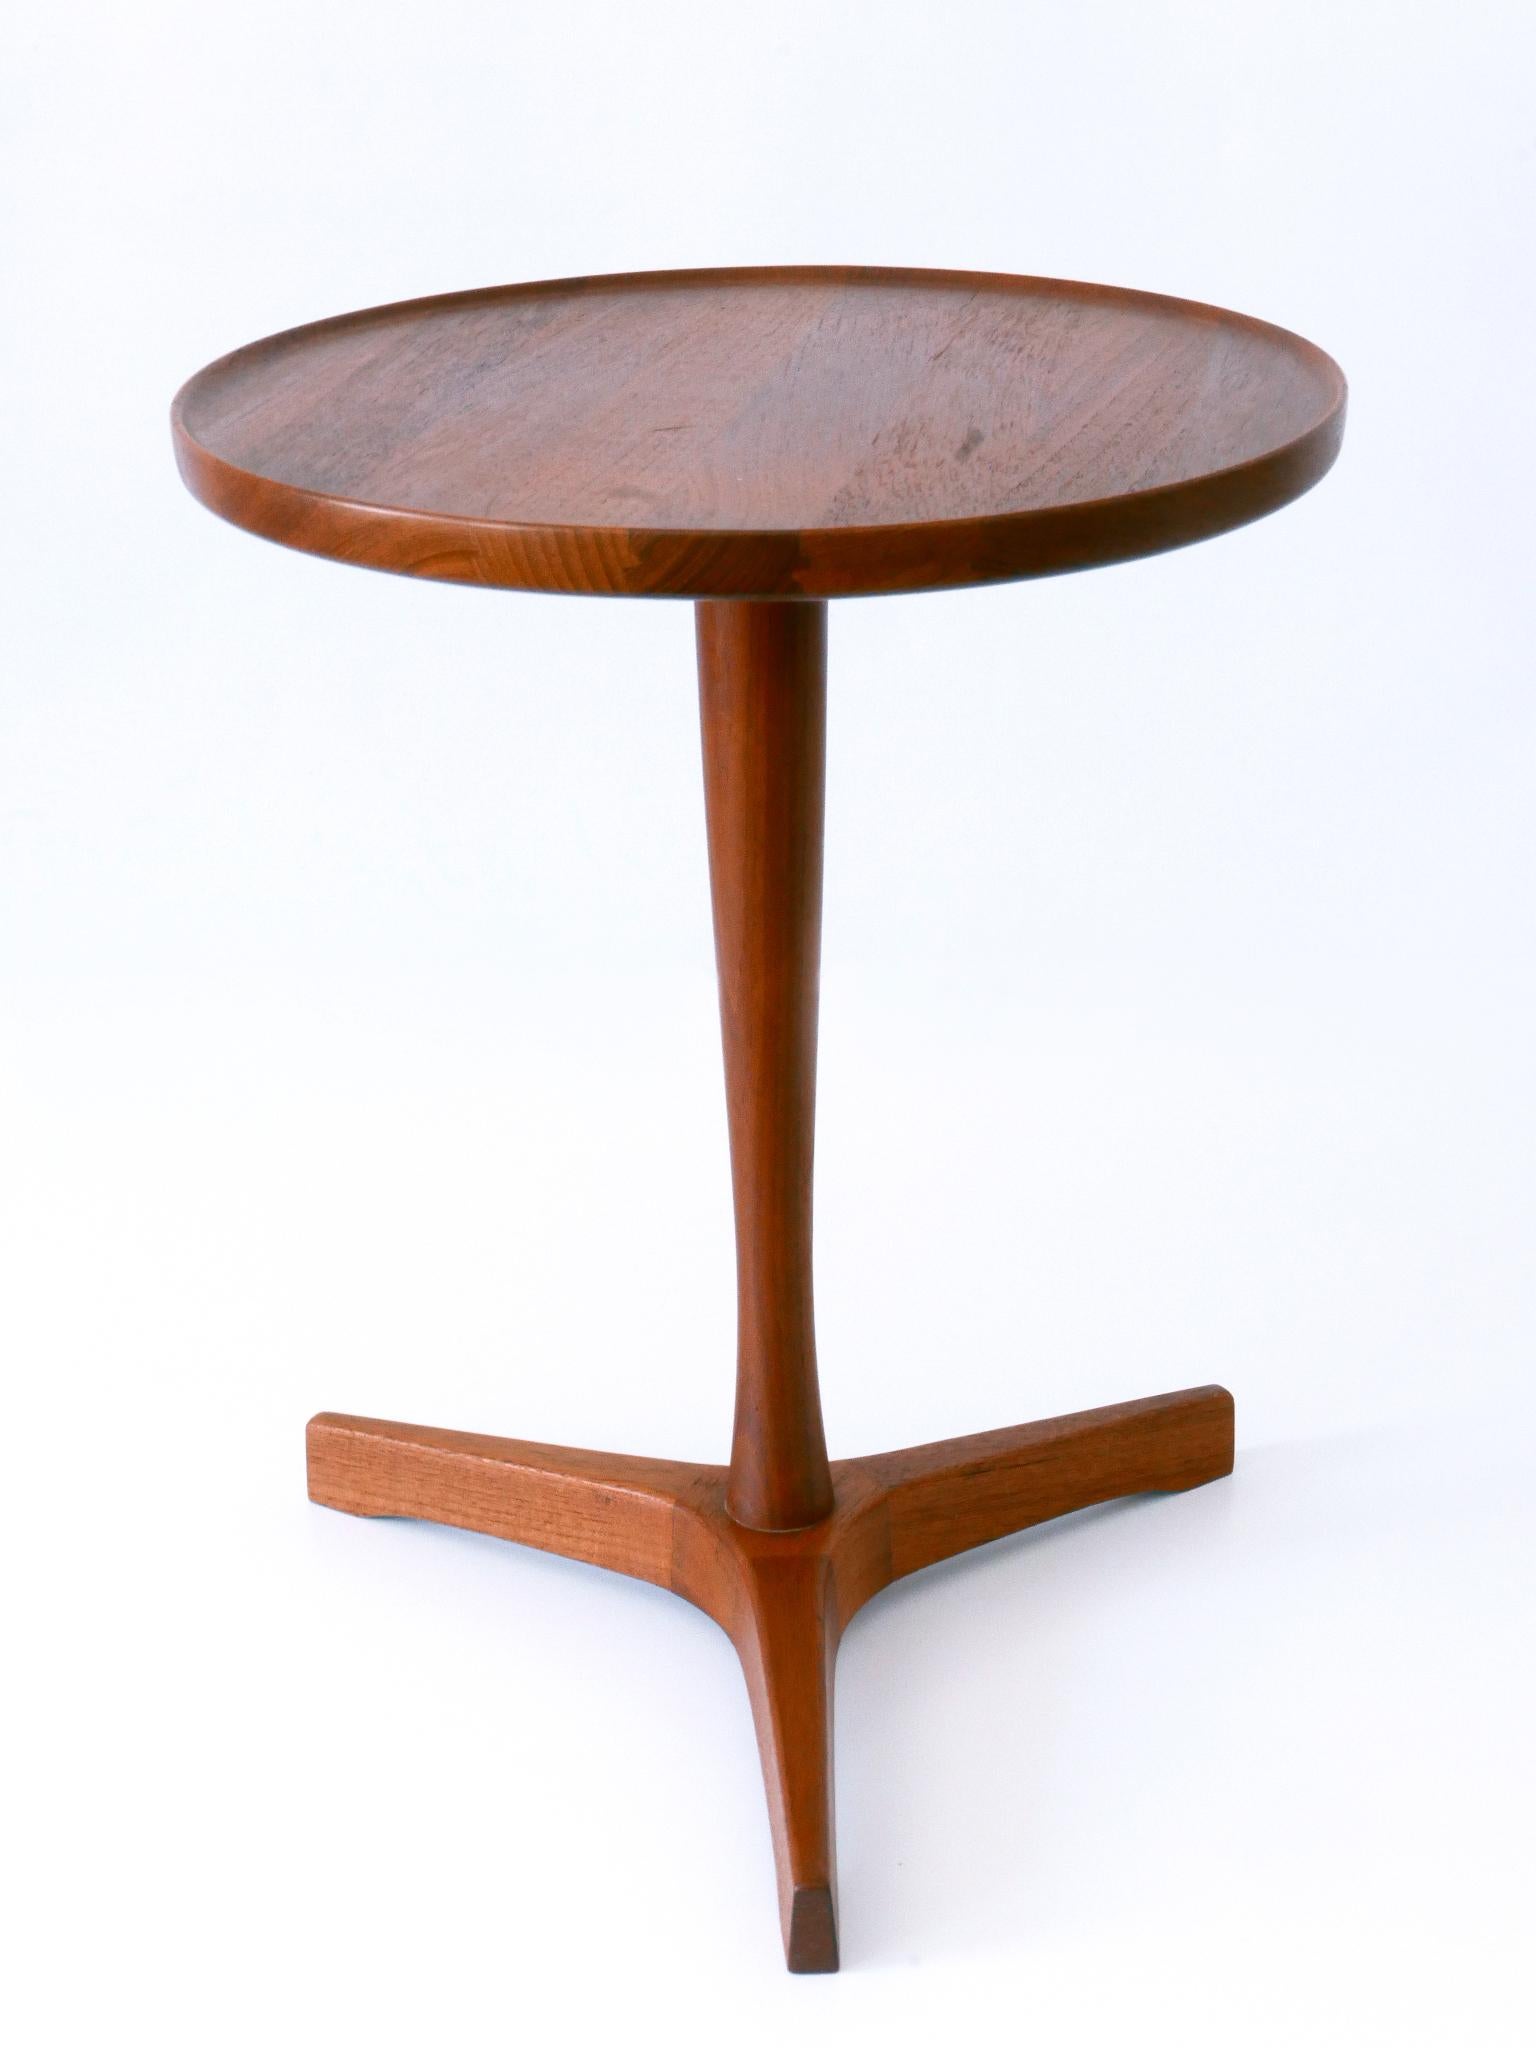 Elegant Mid-Century Modern Teak Side Table by Hans C. Andersen for Artek 1960s In Good Condition For Sale In Munich, DE